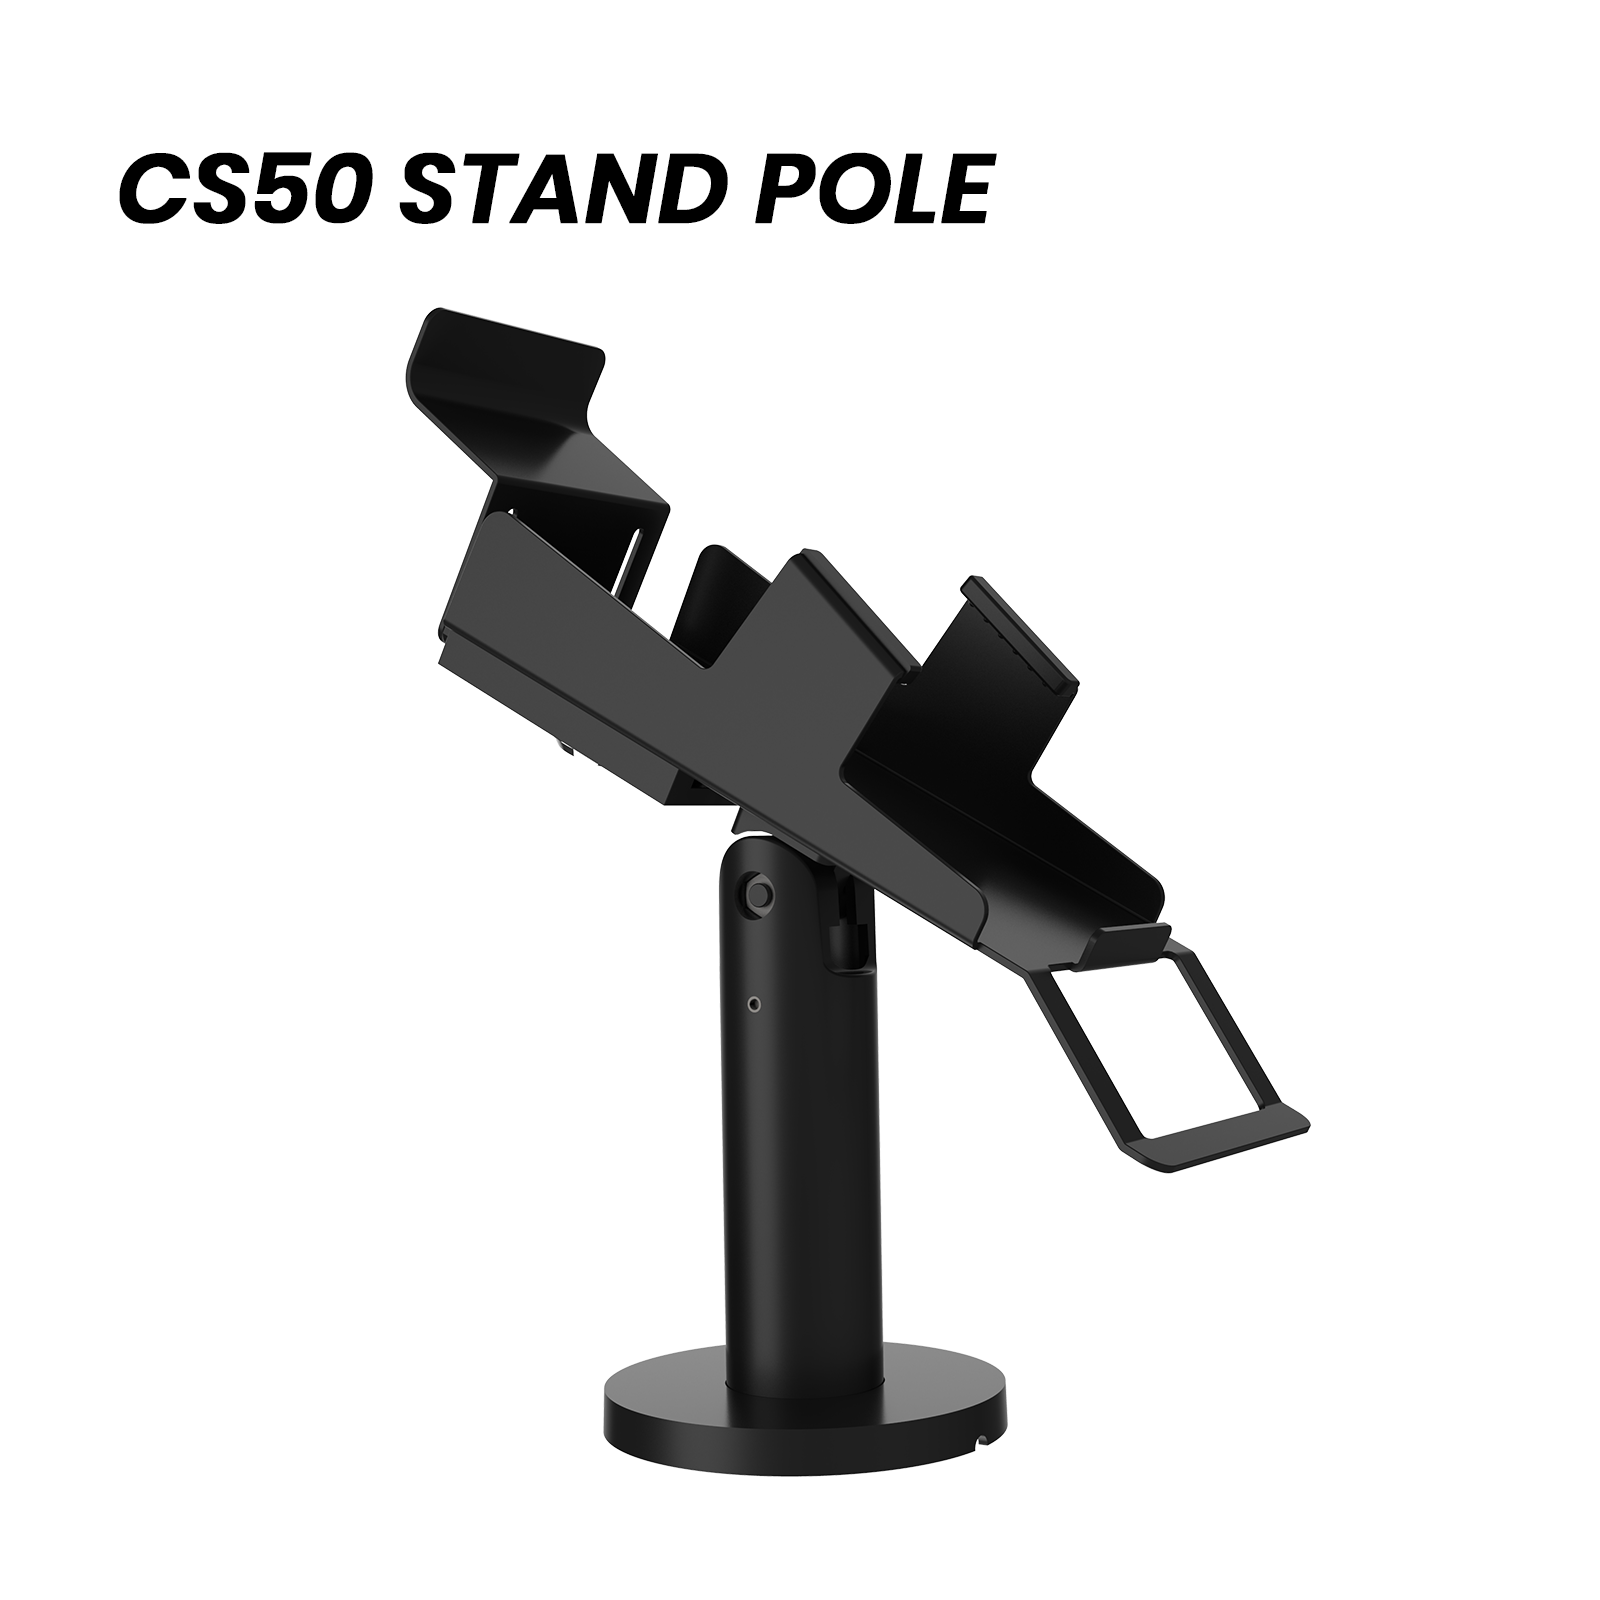 Peripherals For CS50|Smart POS Cradle|POS Stand Pole|CIONTEK